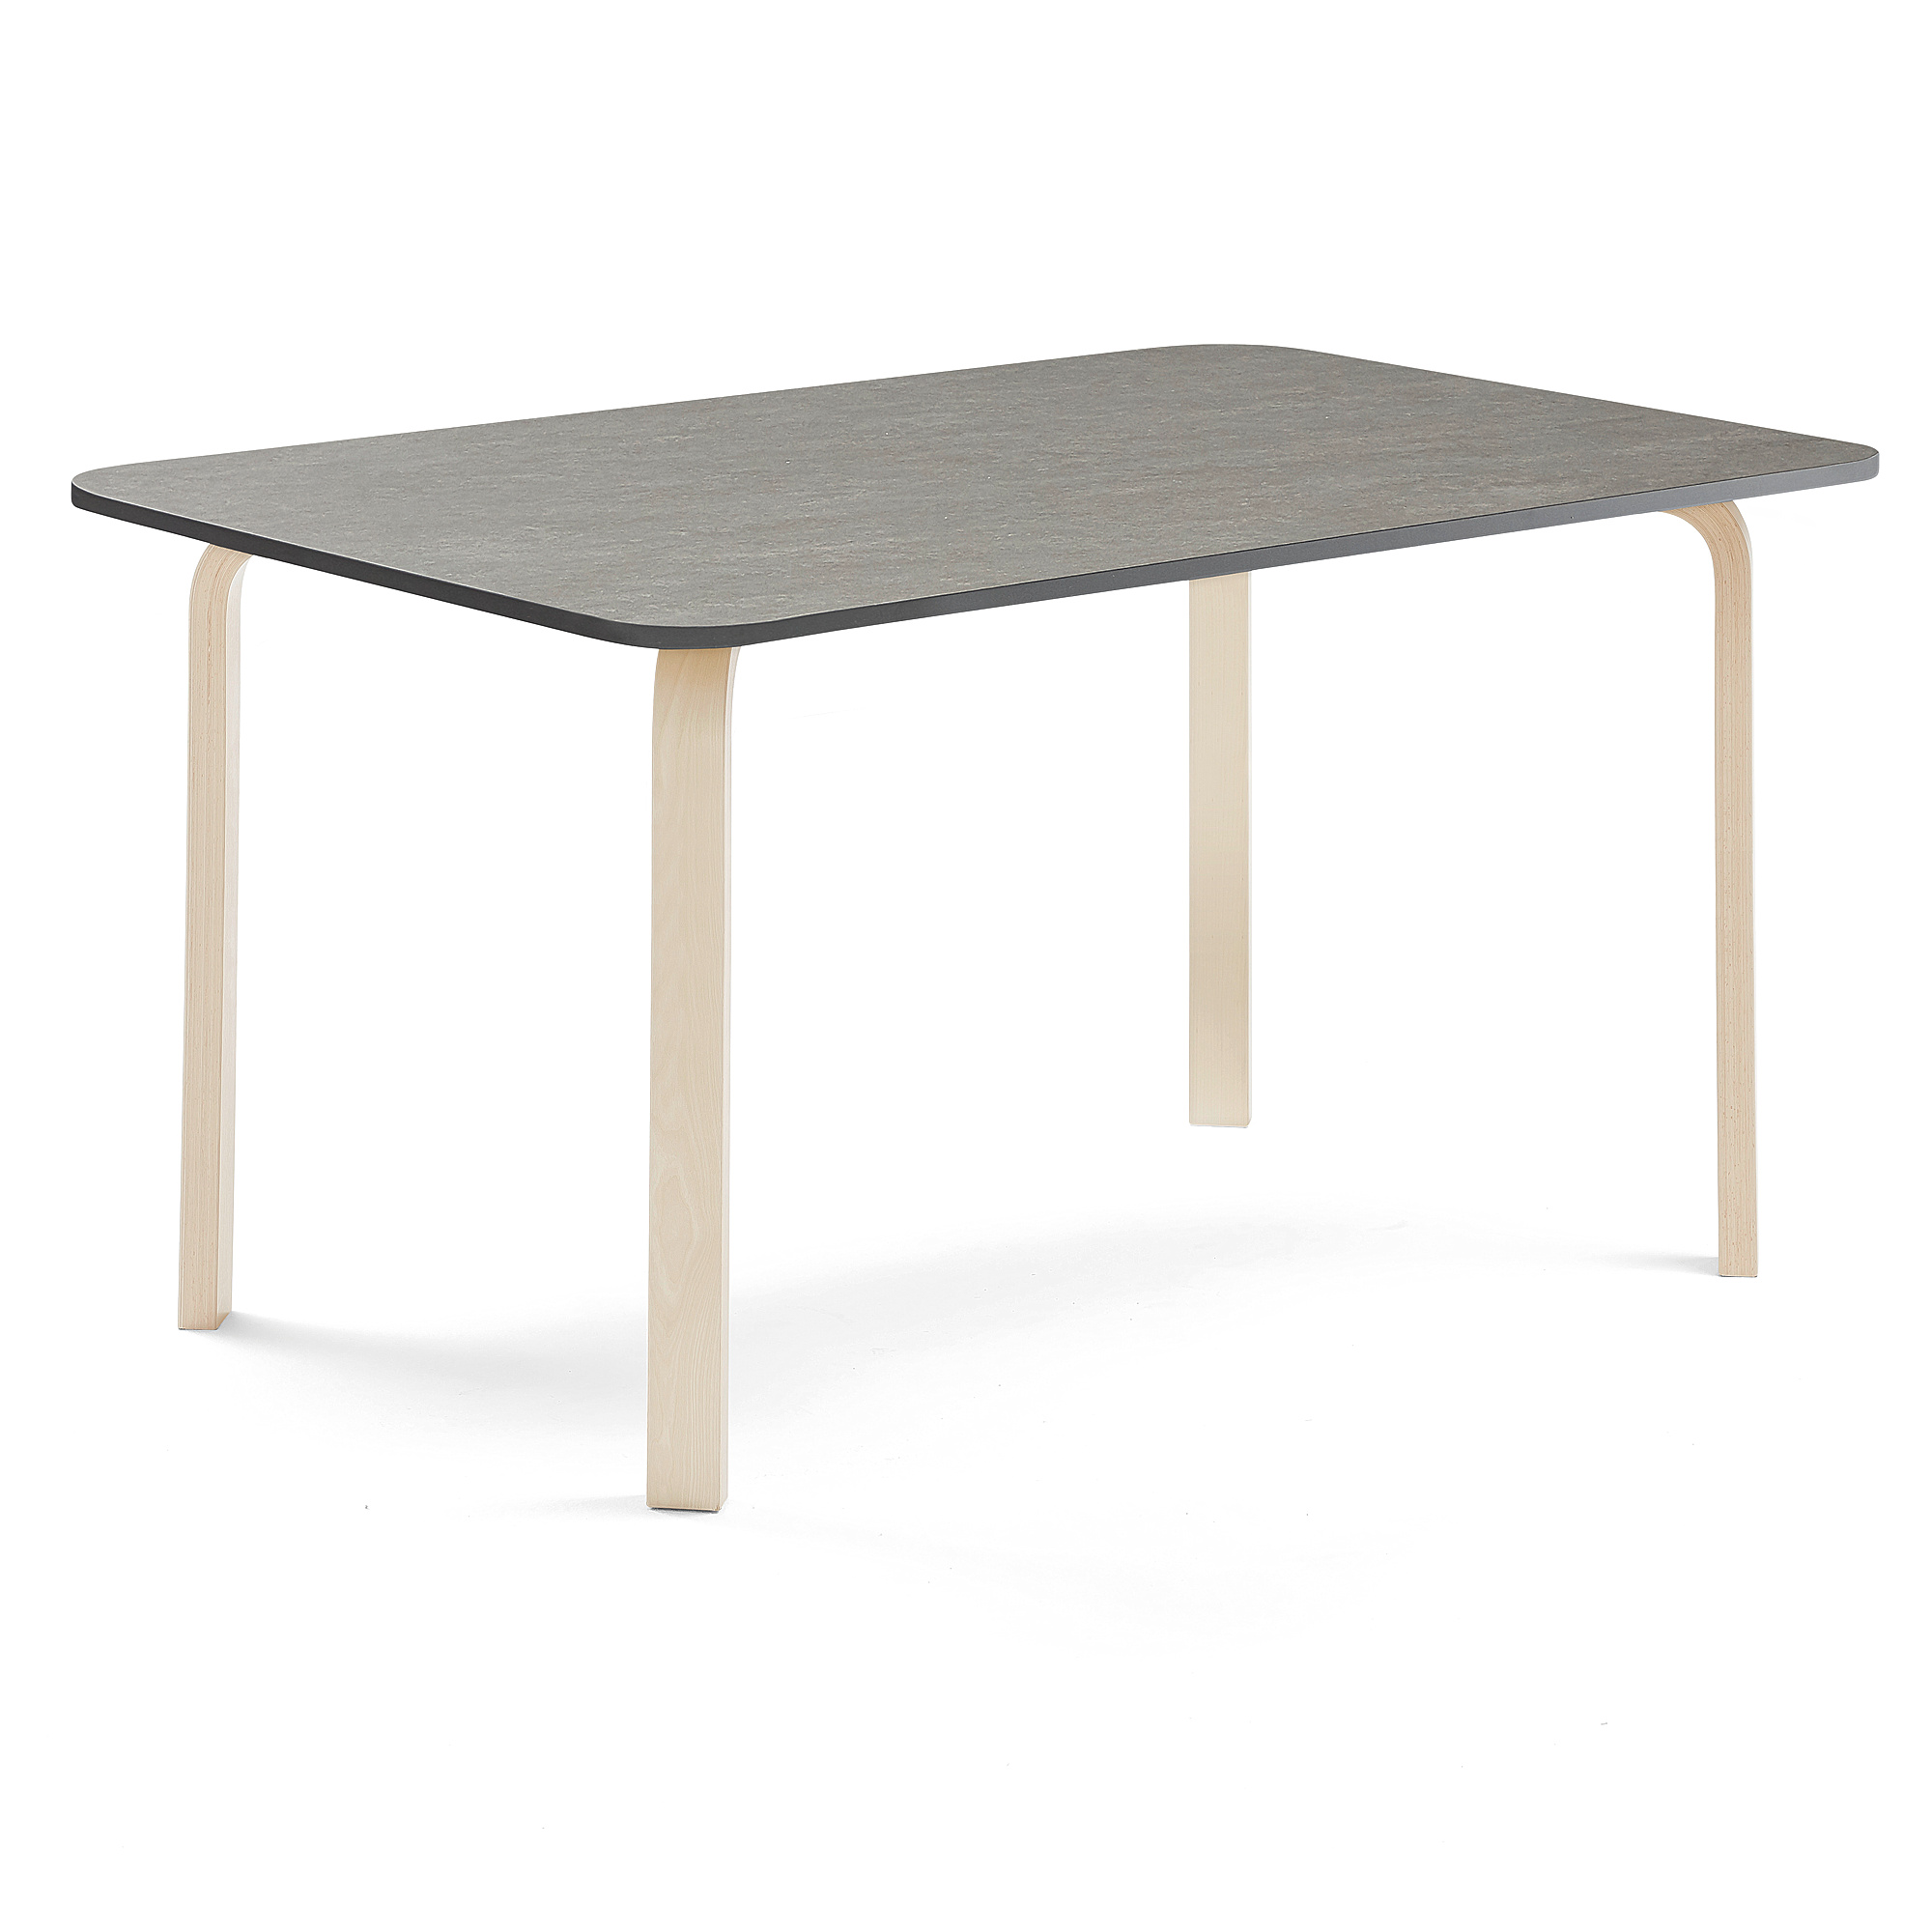 Stůl ELTON, 1800x800x710 mm, bříza, akustické linoleum, tmavě šedá